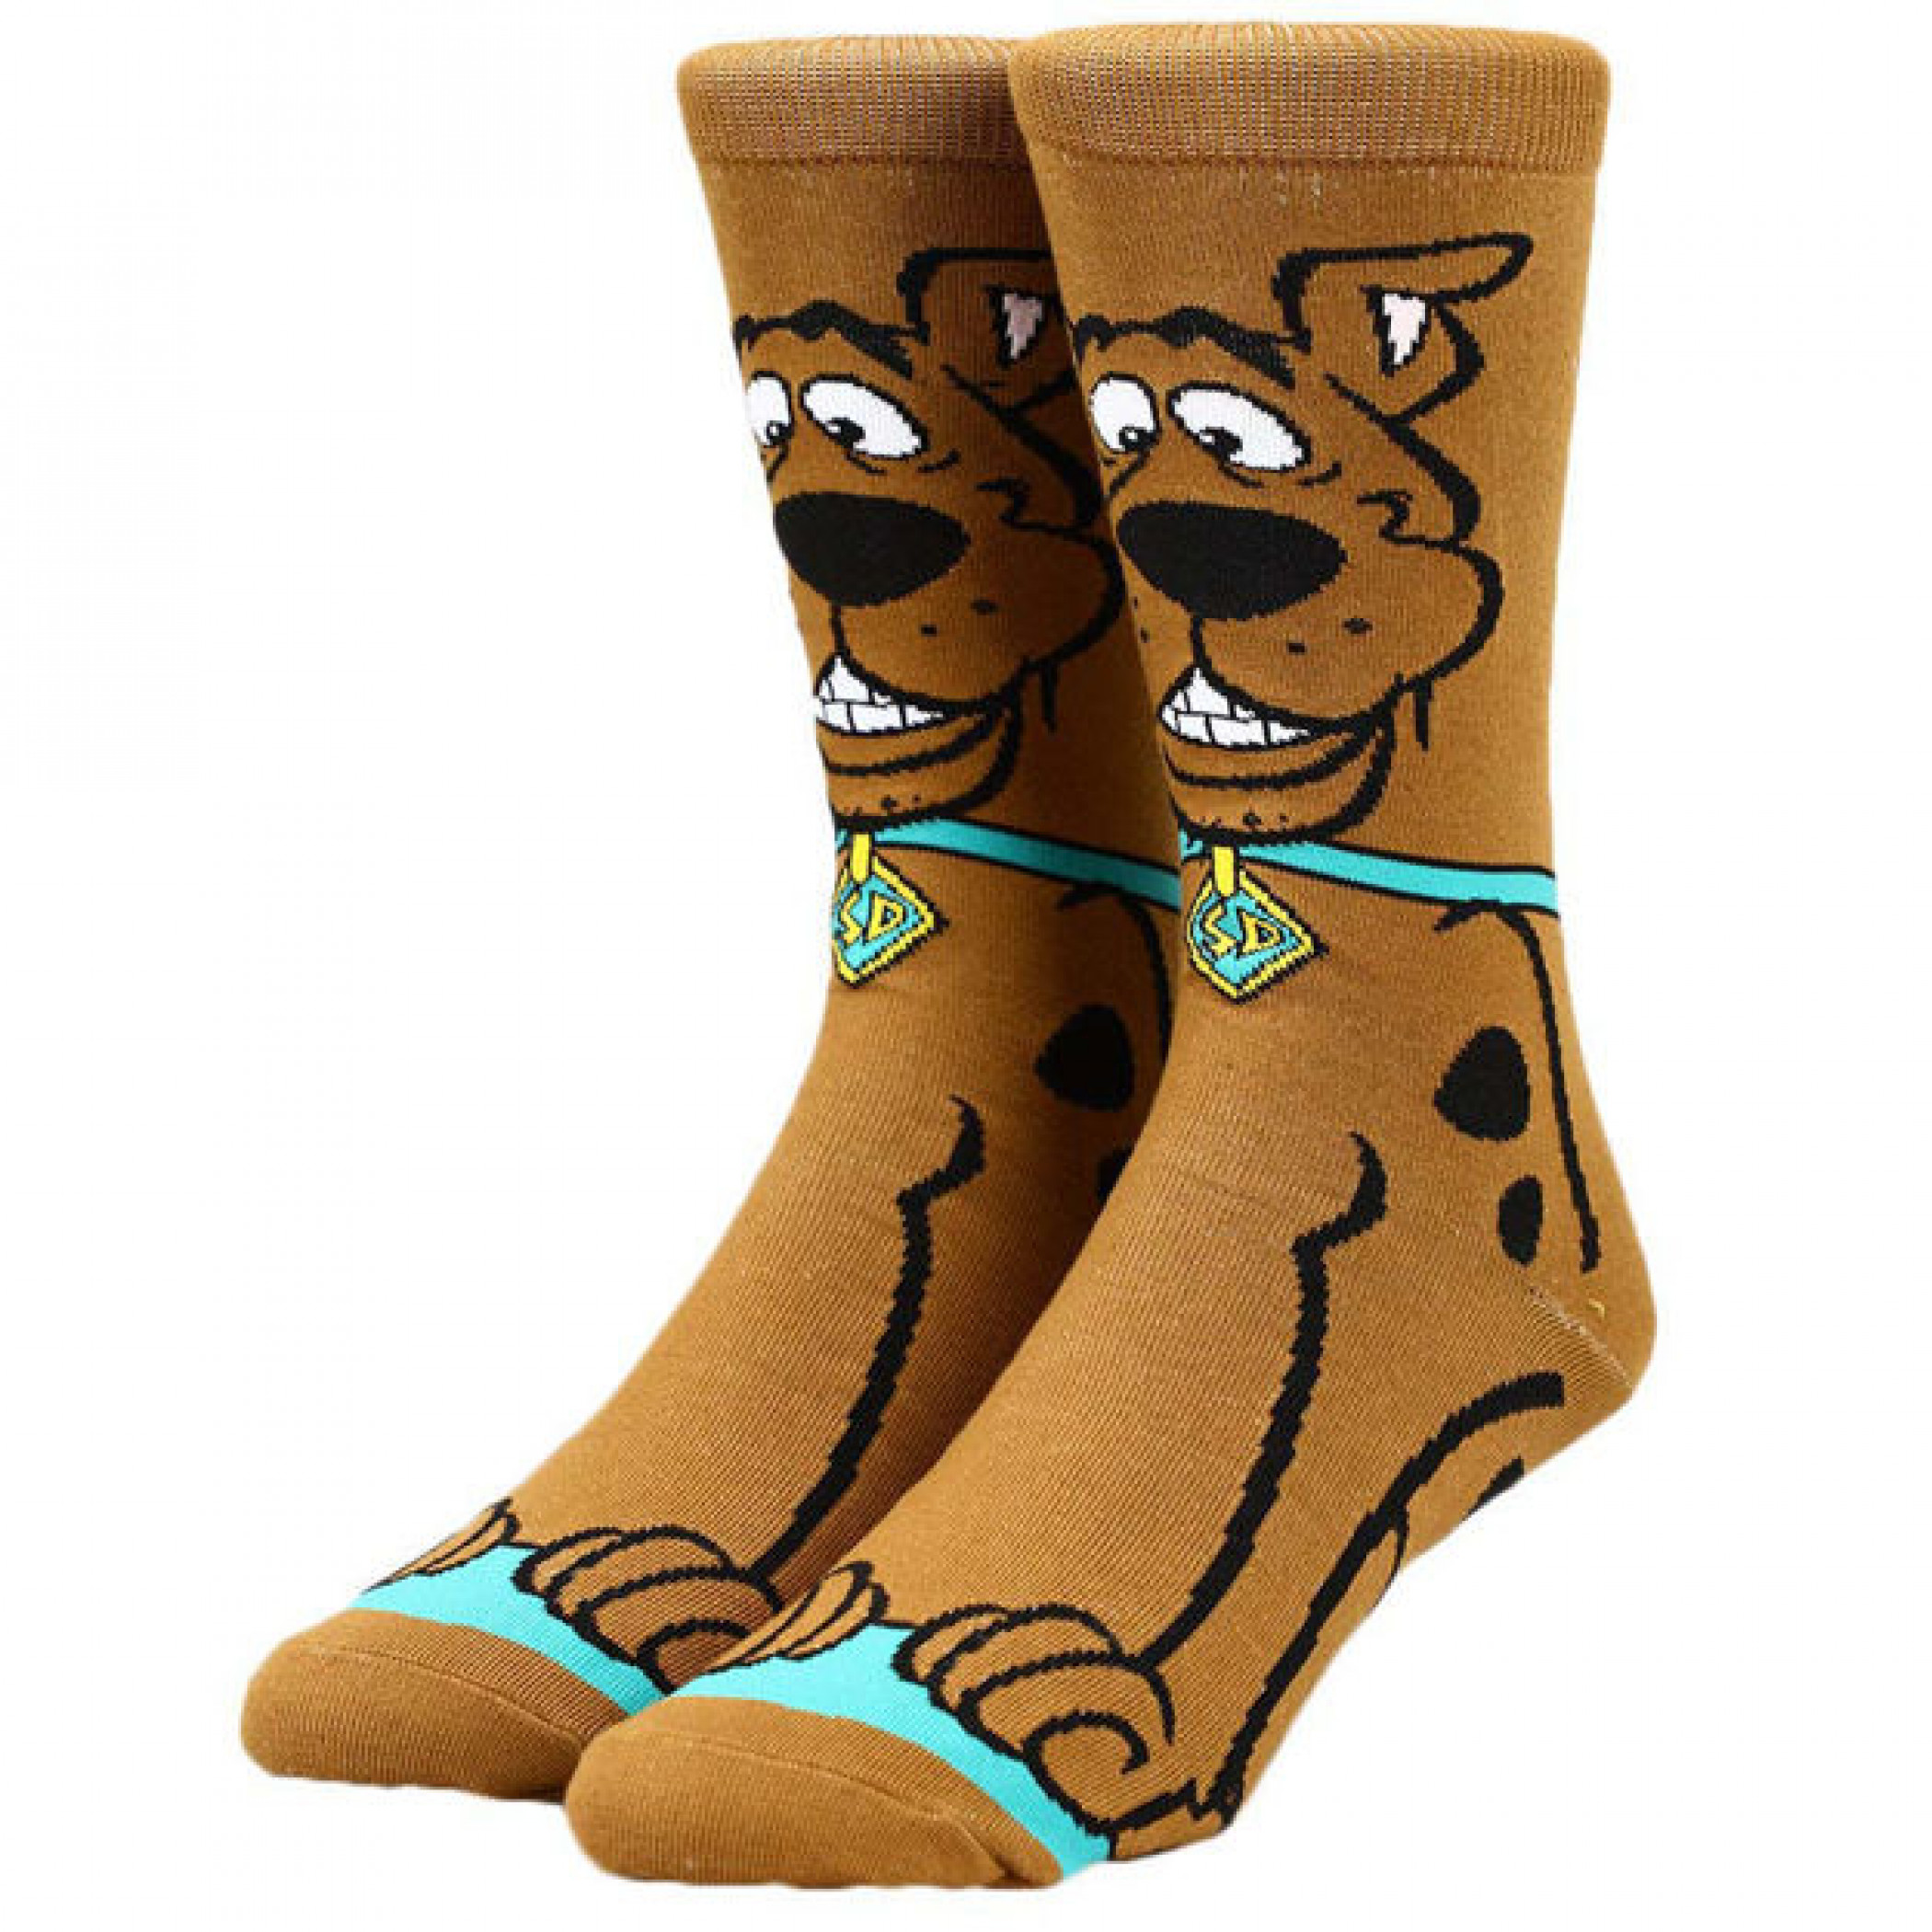 Scooby-Doo Novelty Ears Crew Socks